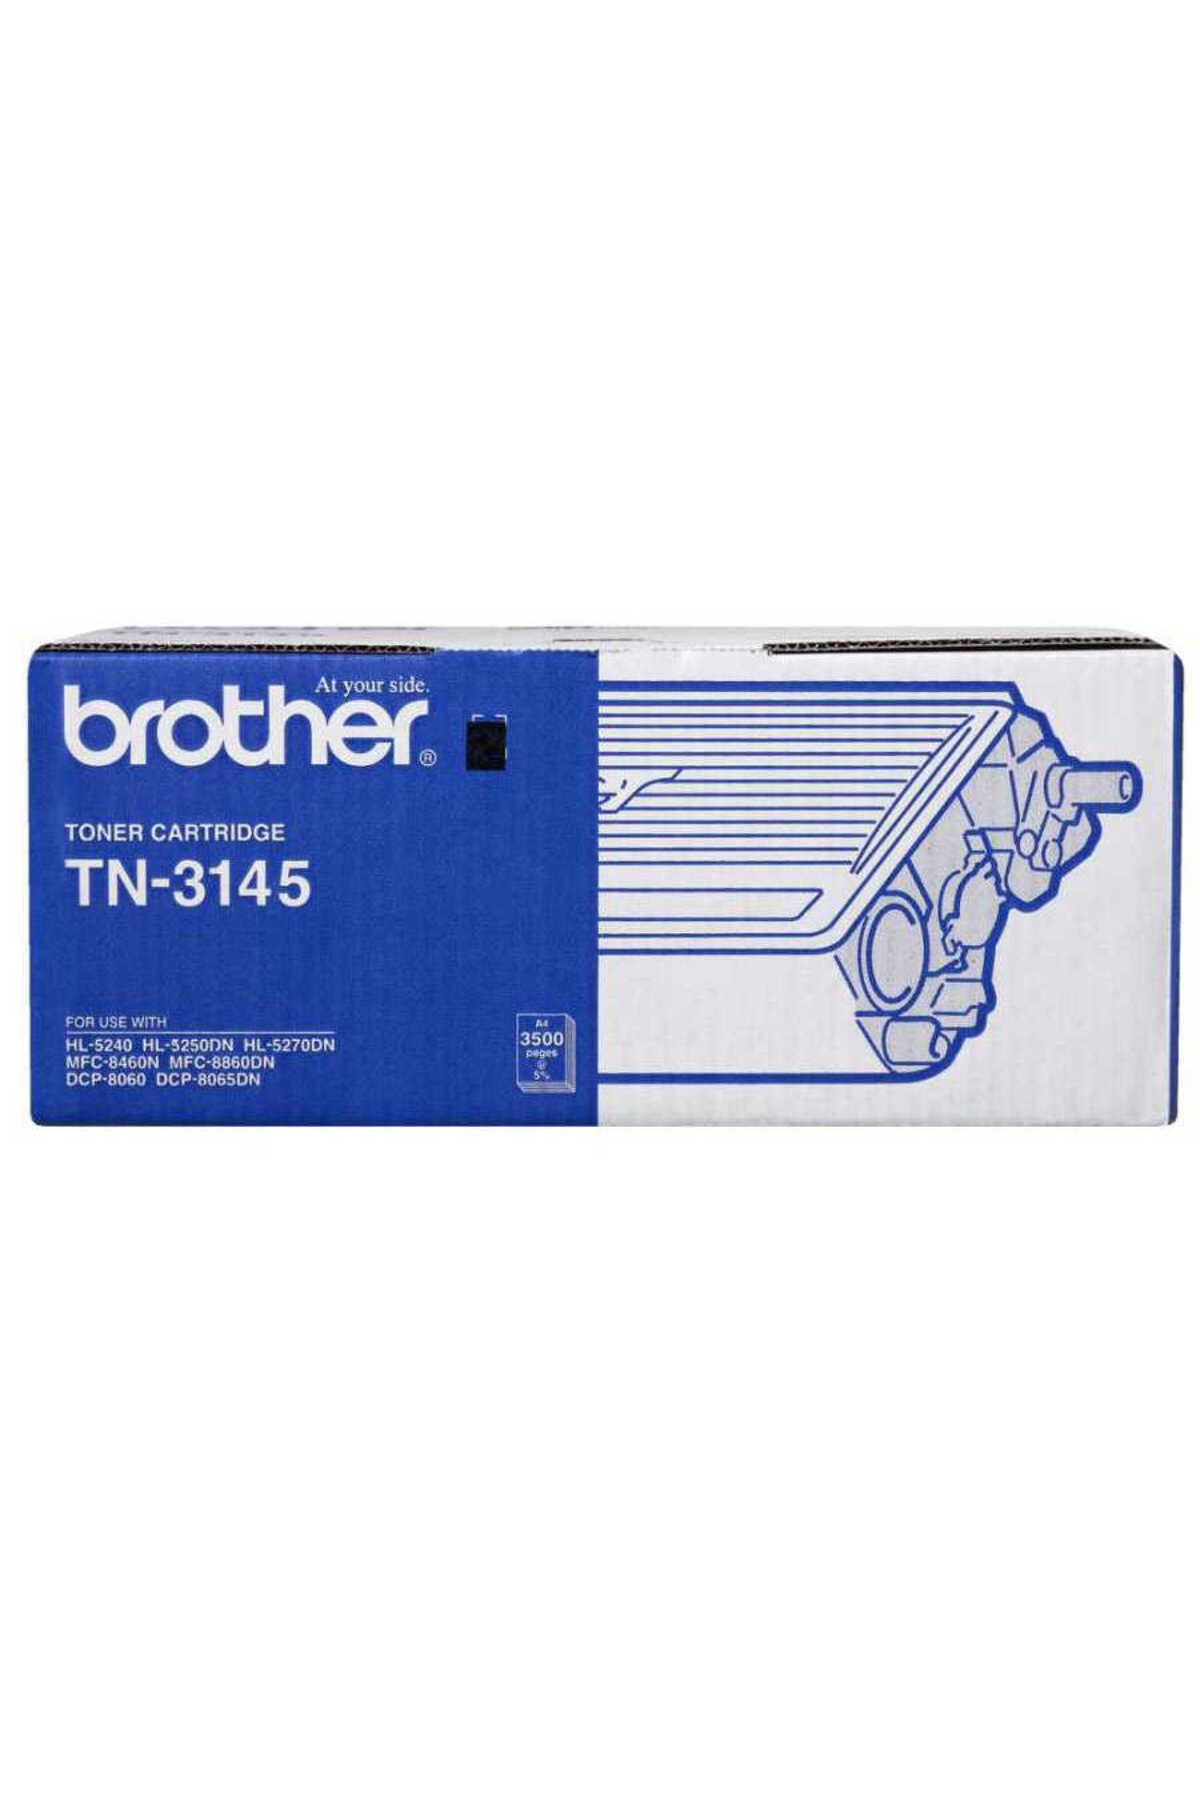 Brother Tn-3145 Toner